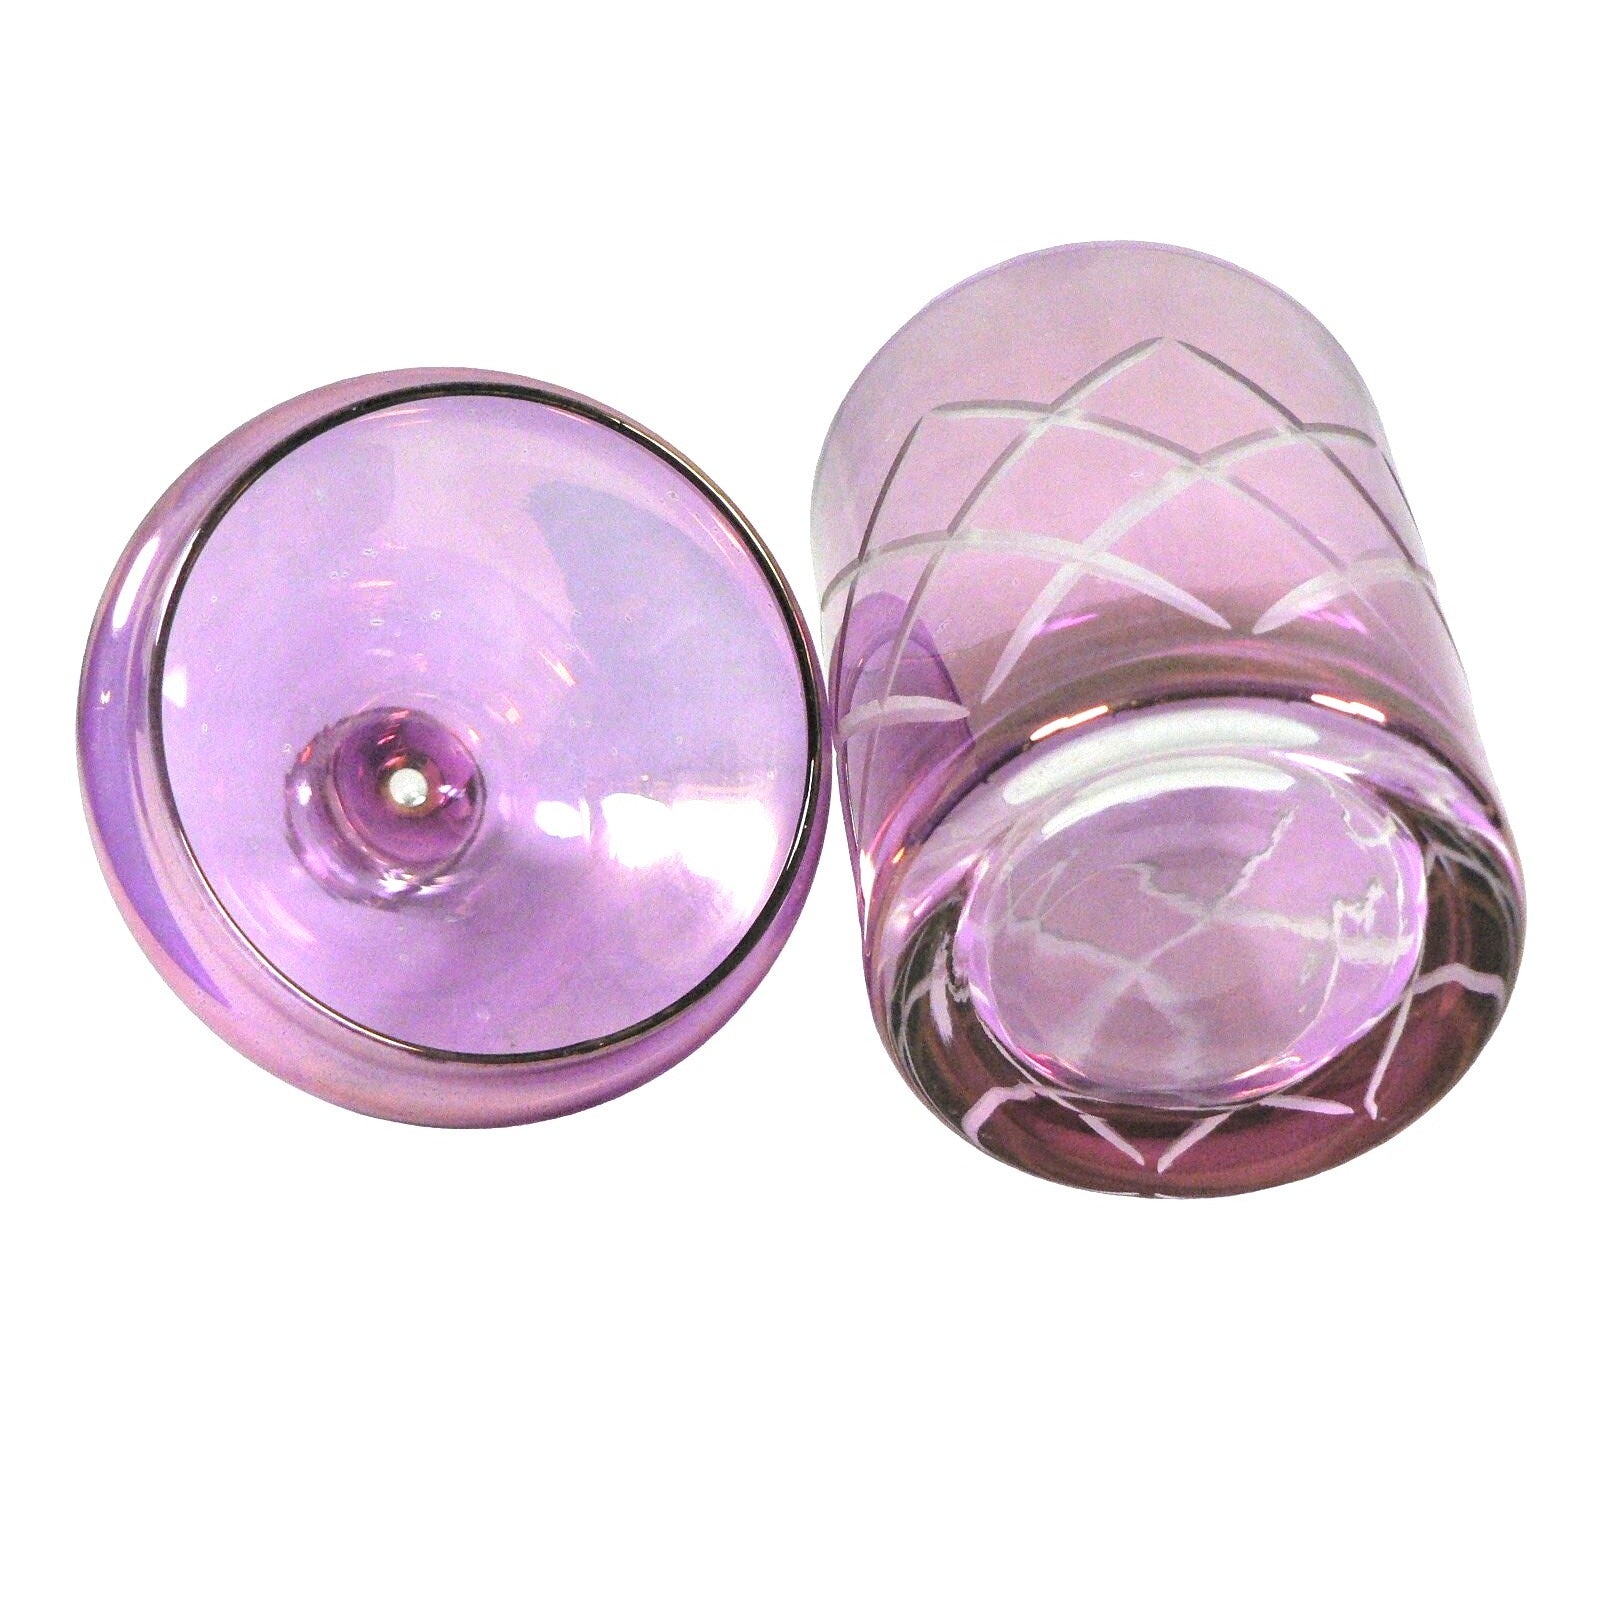 Glass Jar Iridescent Pink Translucent Cut to Clear Diamond Design Vtg 7.5"